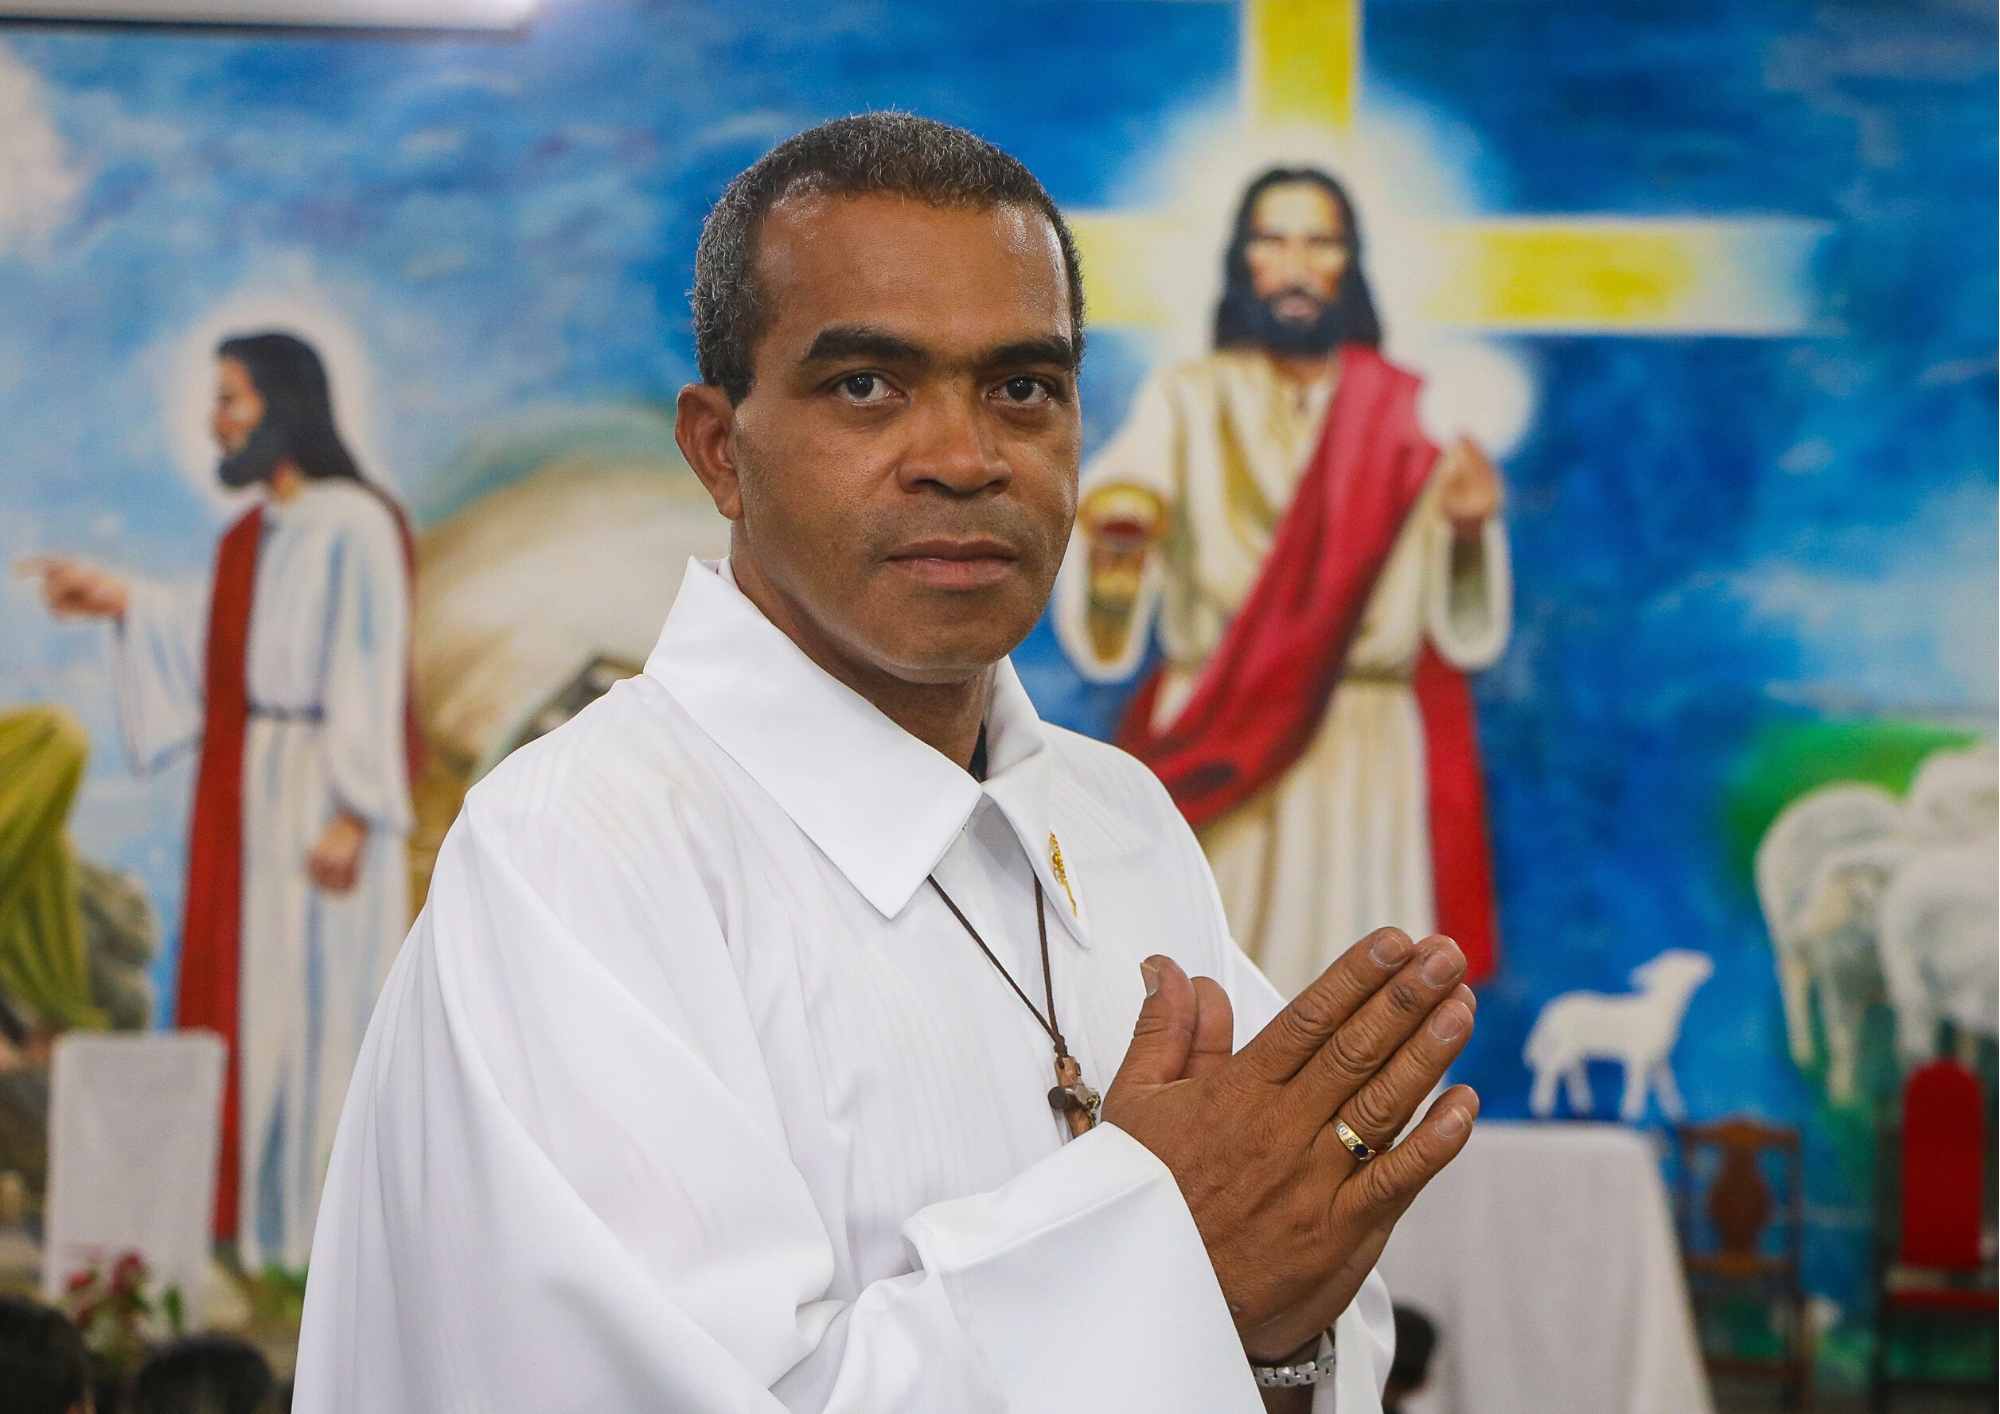 Sorrisense será o primeiro diácono permanente ordenado pela Diocese de Sinop, Brasil